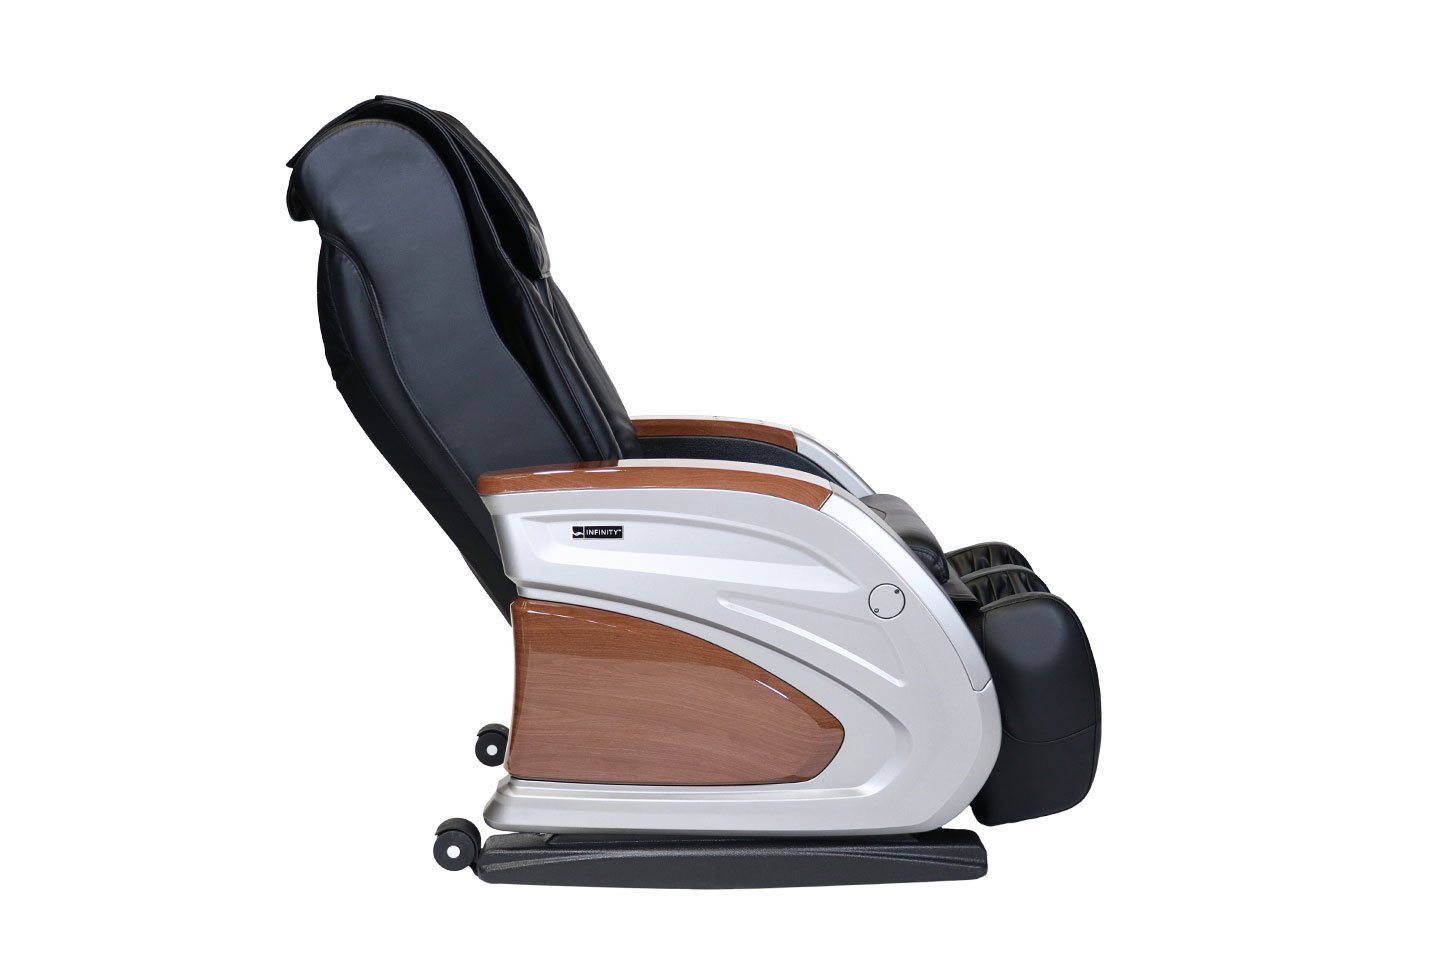 Infinity Share Vending Massage Chair